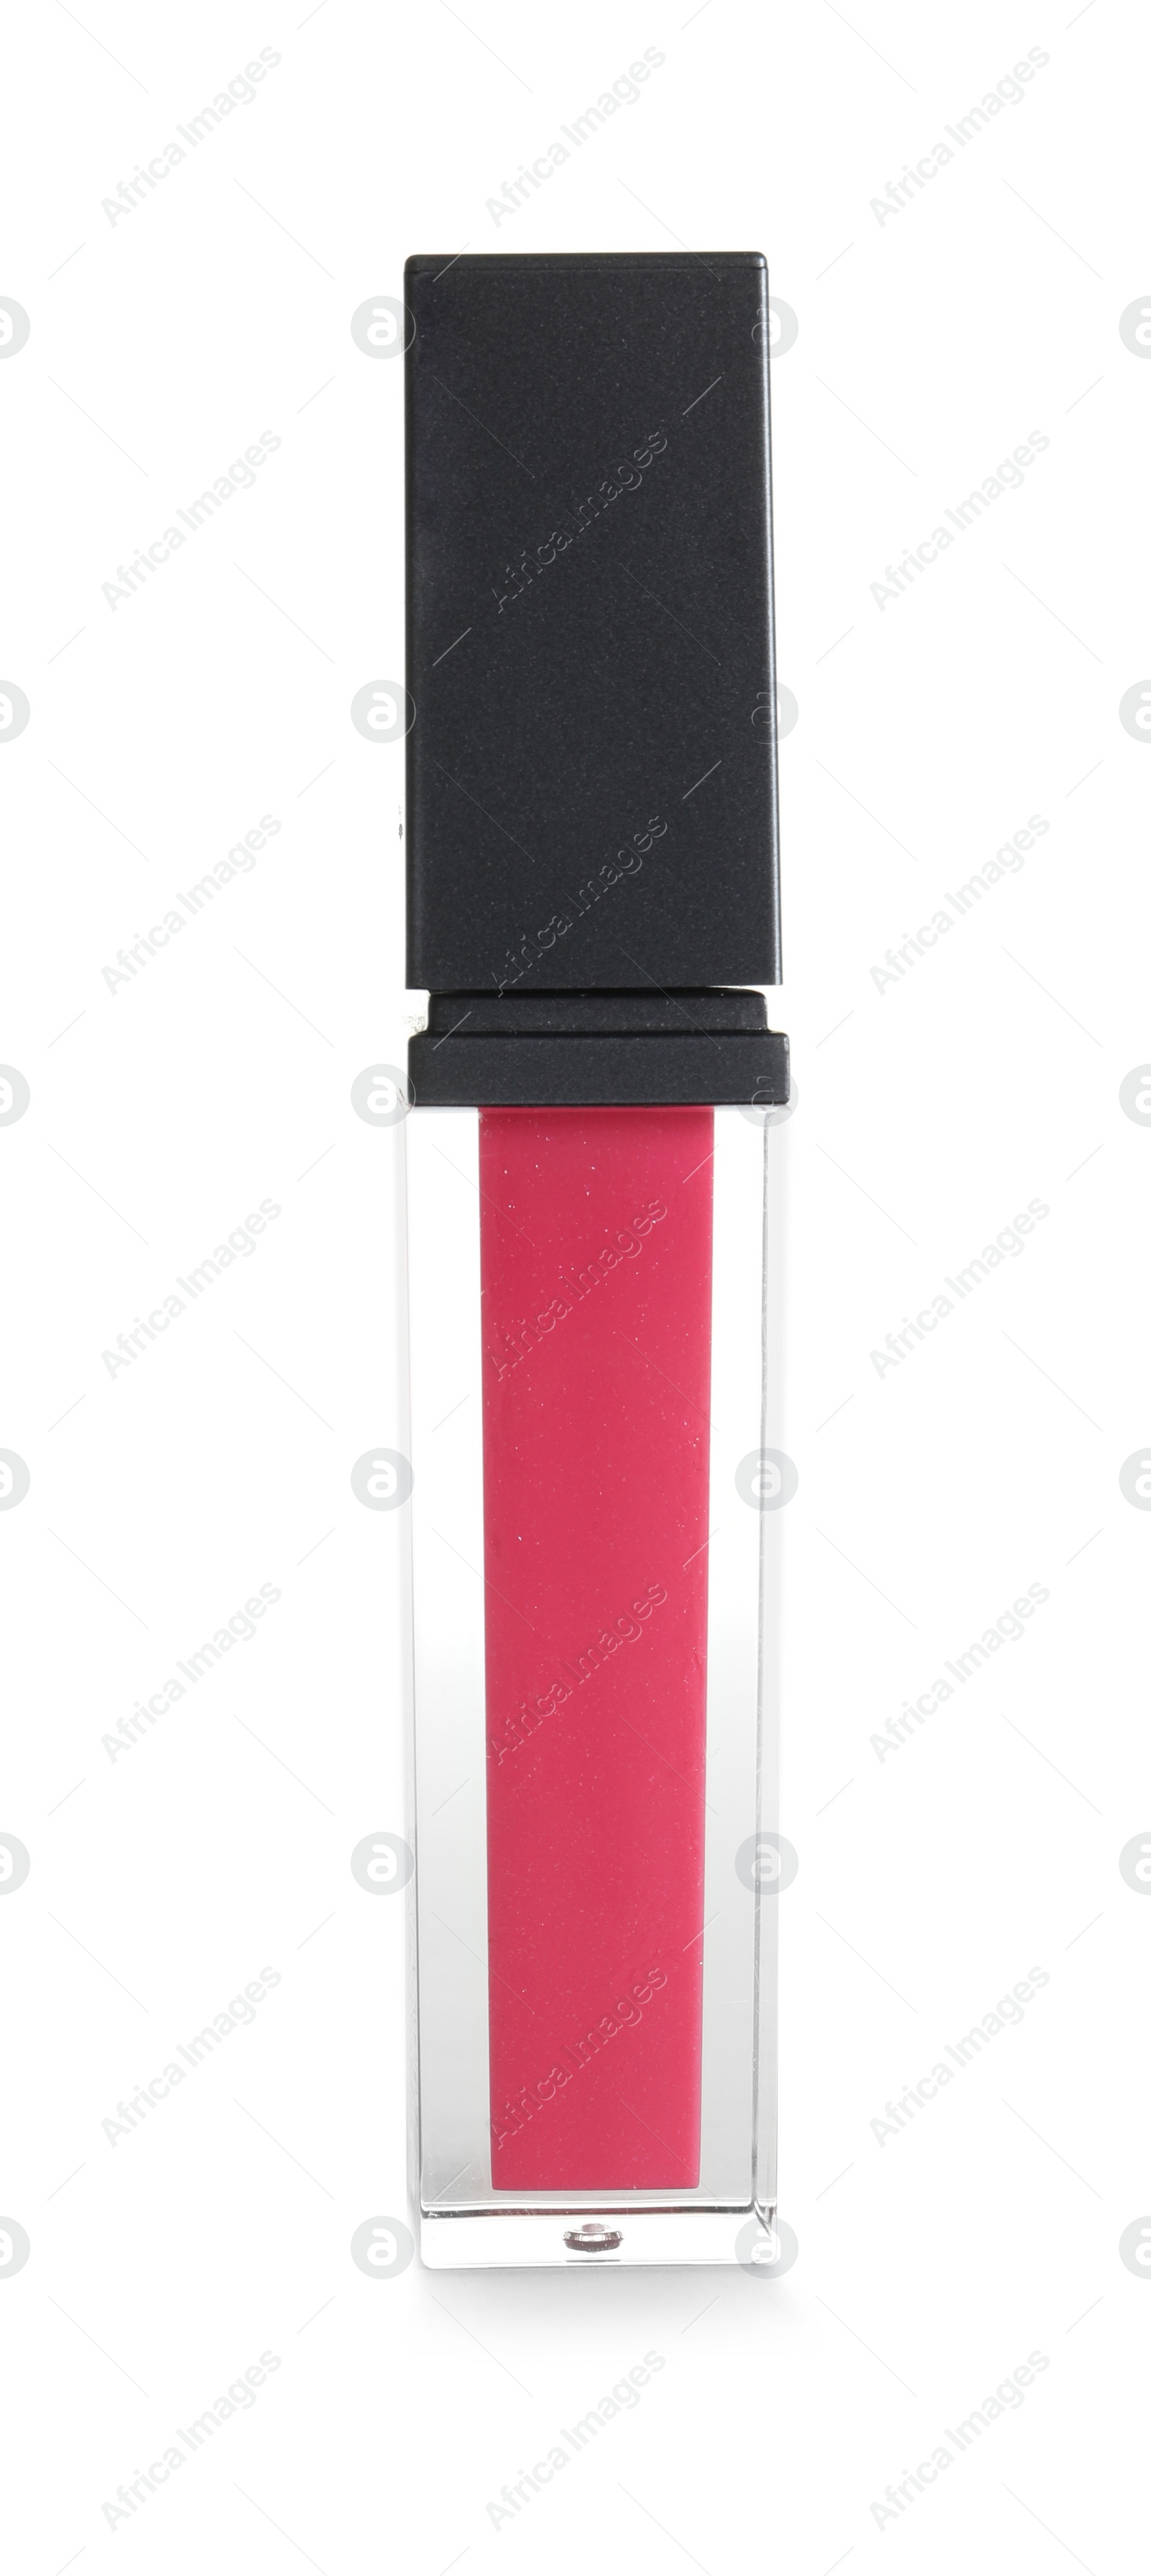 Photo of Tube of liquid lipstick isolated on white